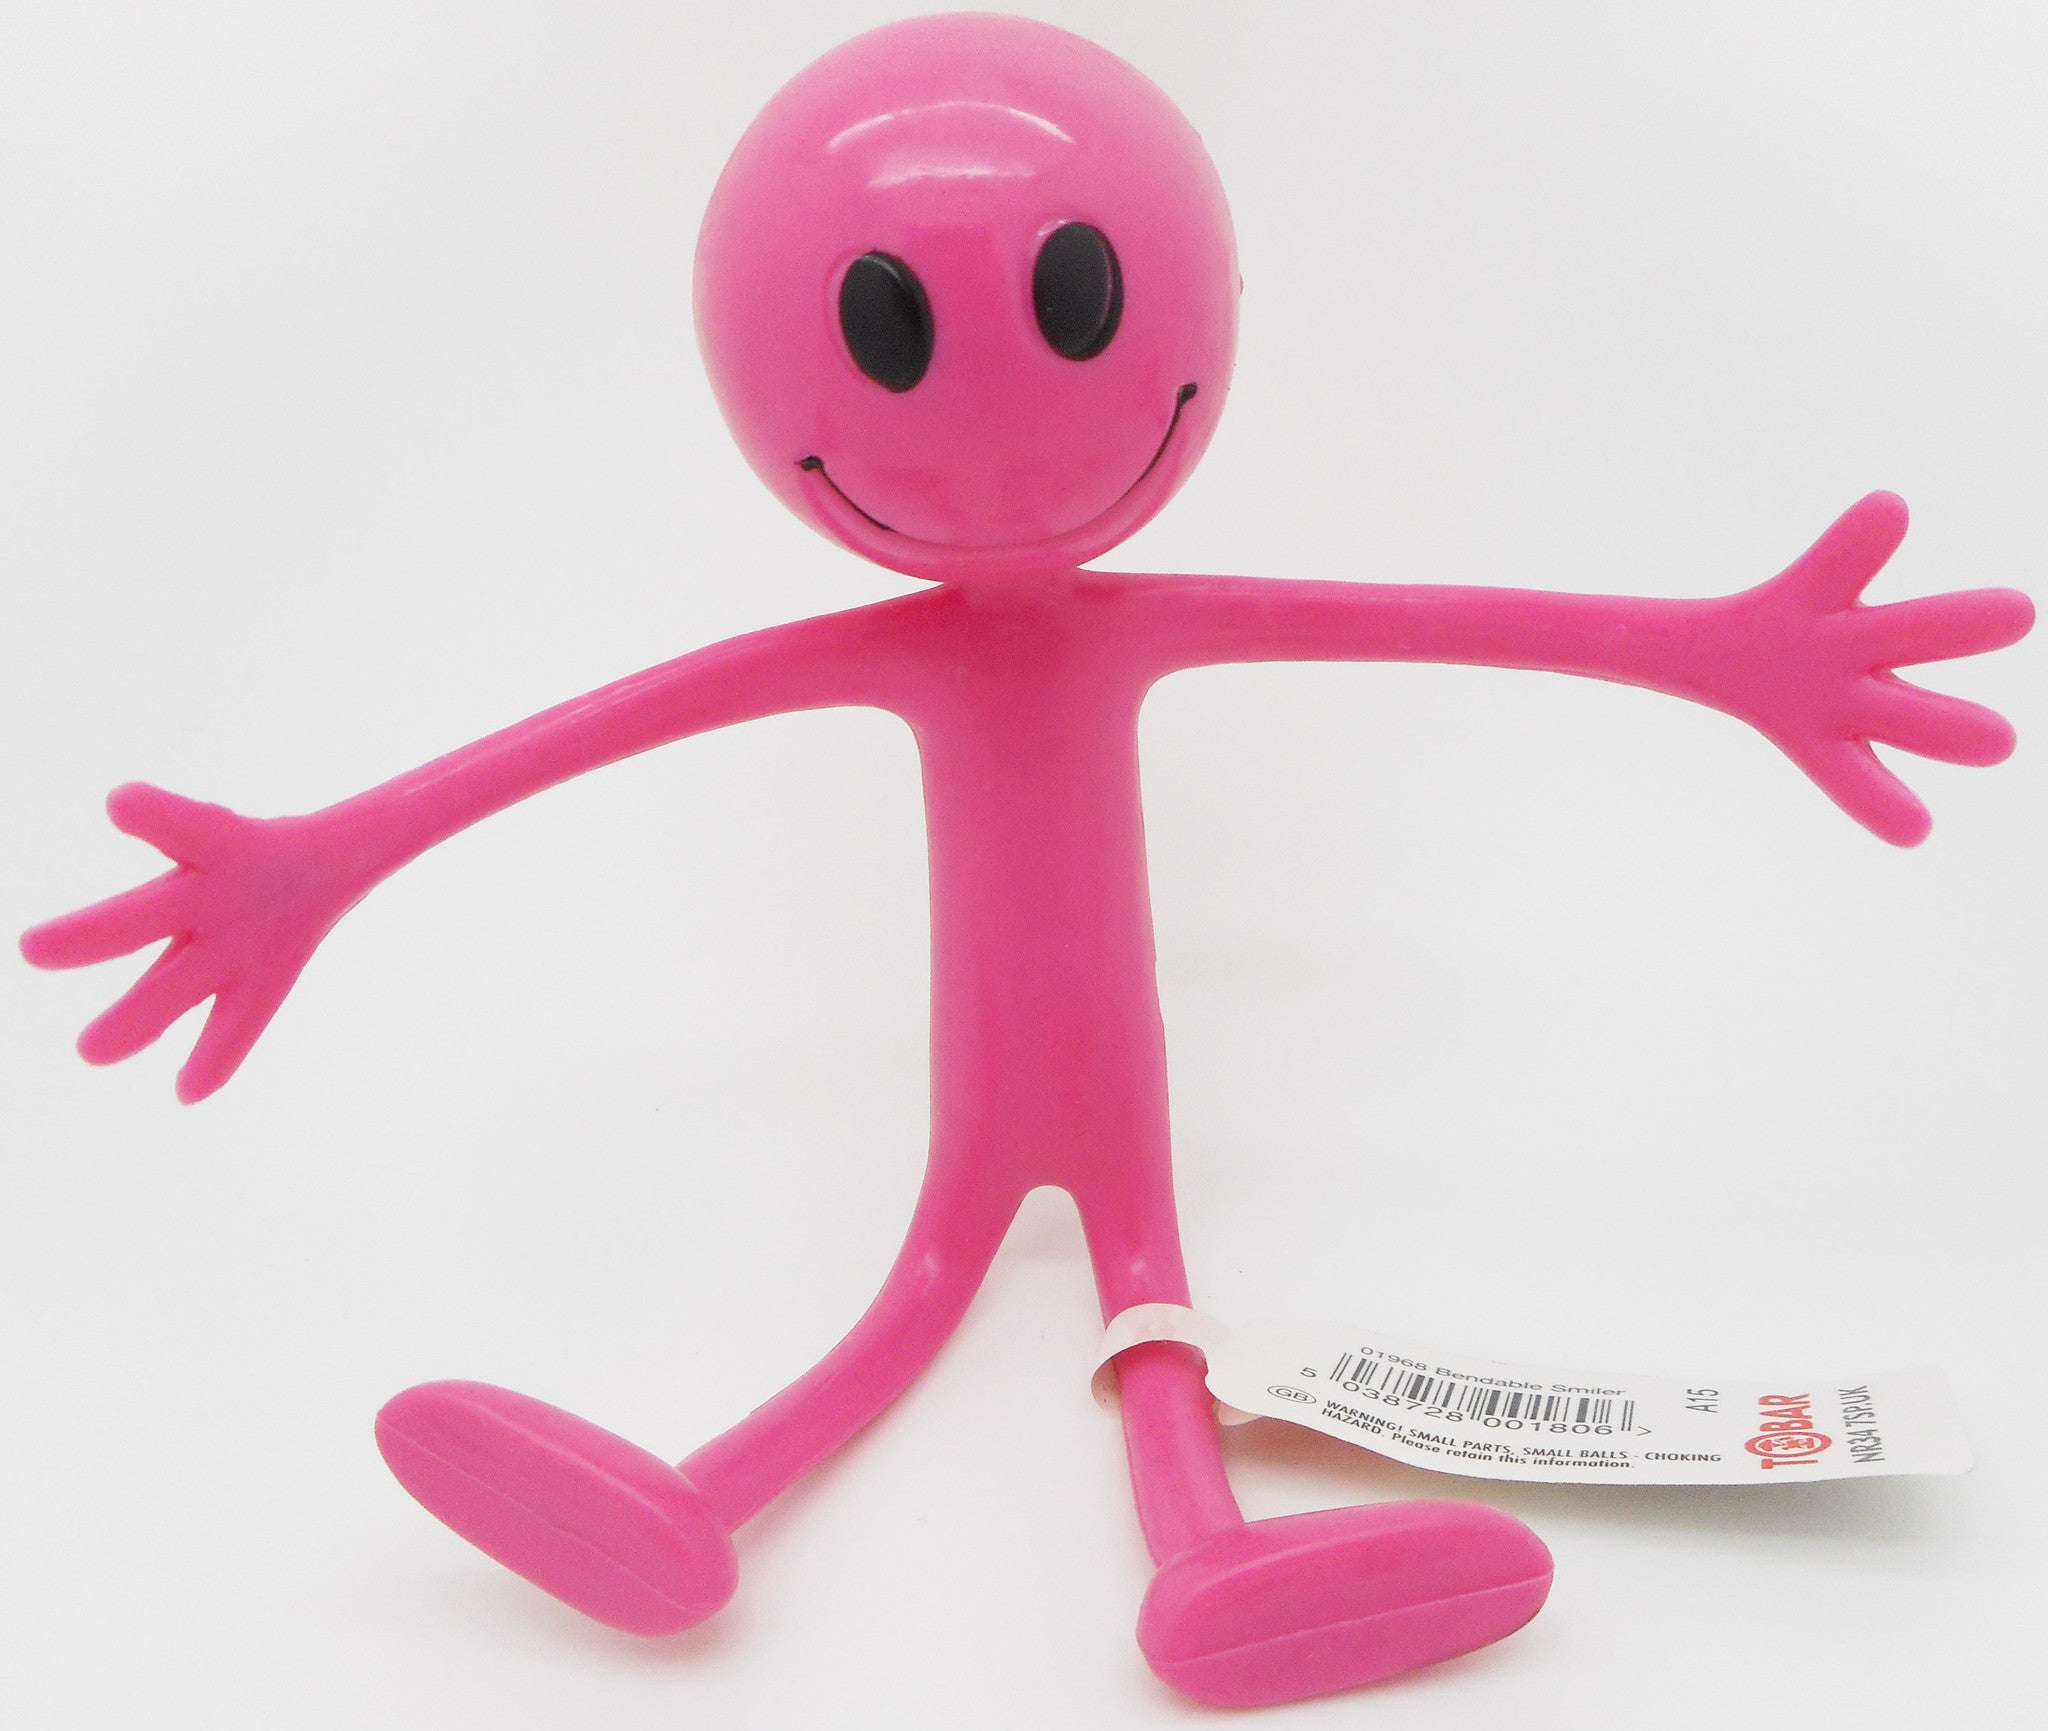 Pink Bendy Man tactile Stress Relief Resource | BSLforKids